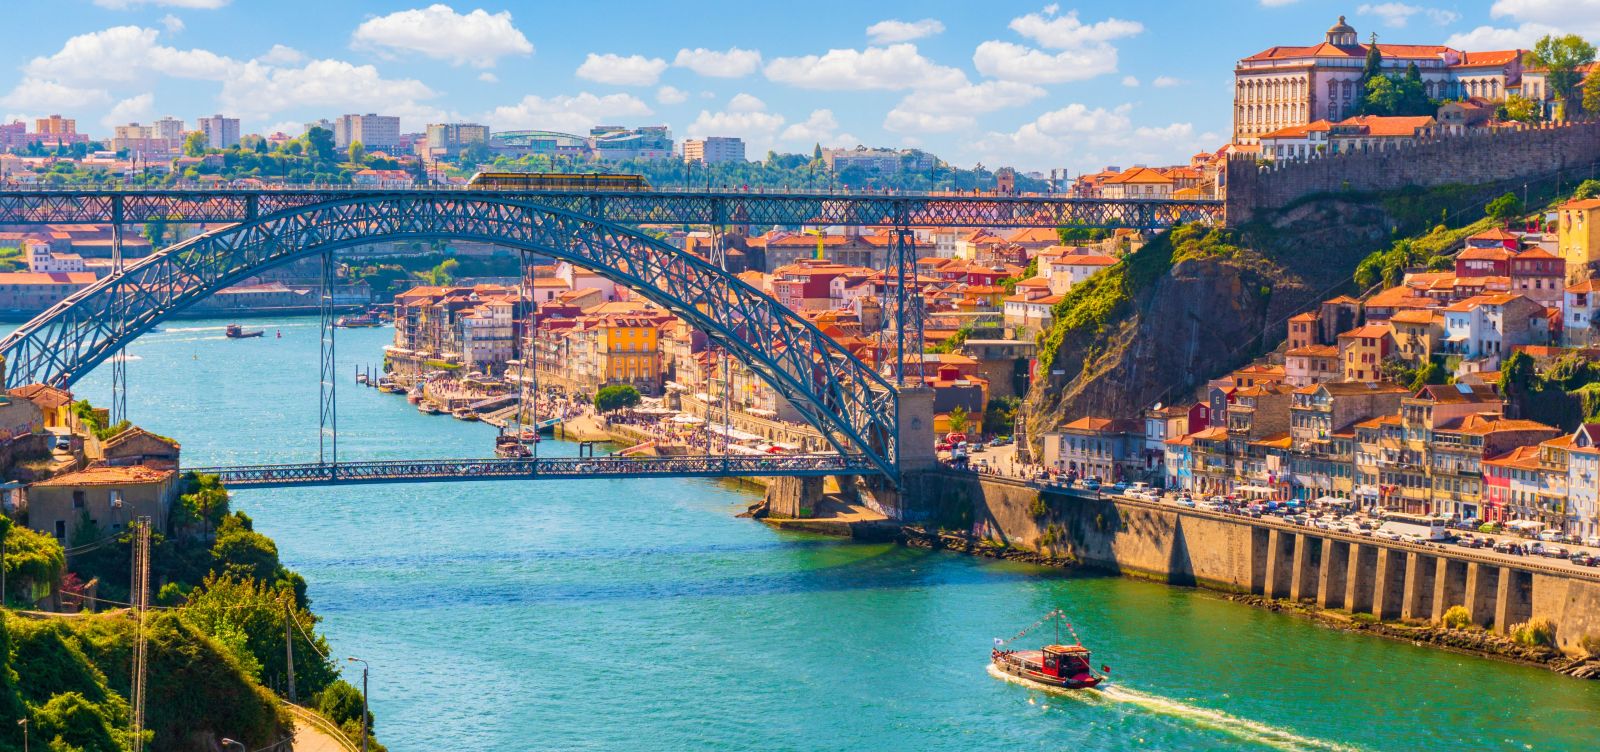 Luís I Bridge that spans the River Douro between the cities of Porto and Vila Nova de Gaia